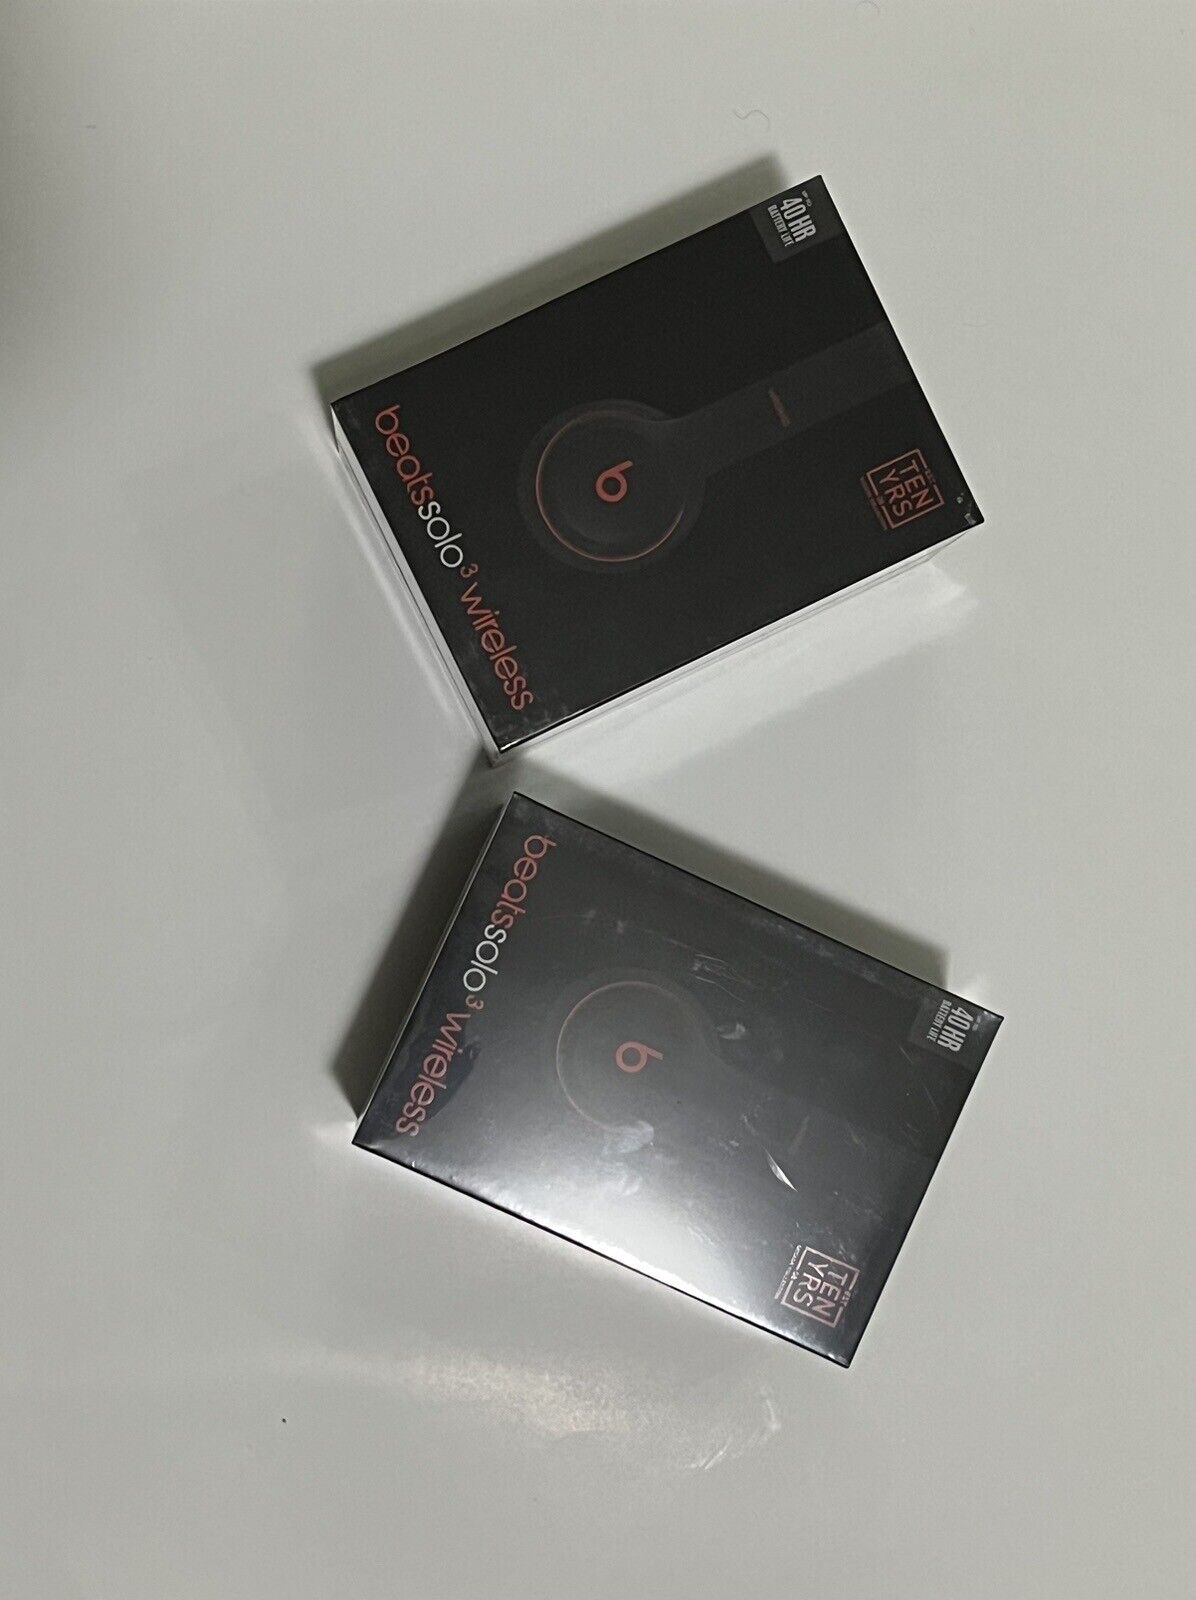 New Beats by Dr. Dre Beats Solo3 Wireless On-Ear Headphones - Red Black